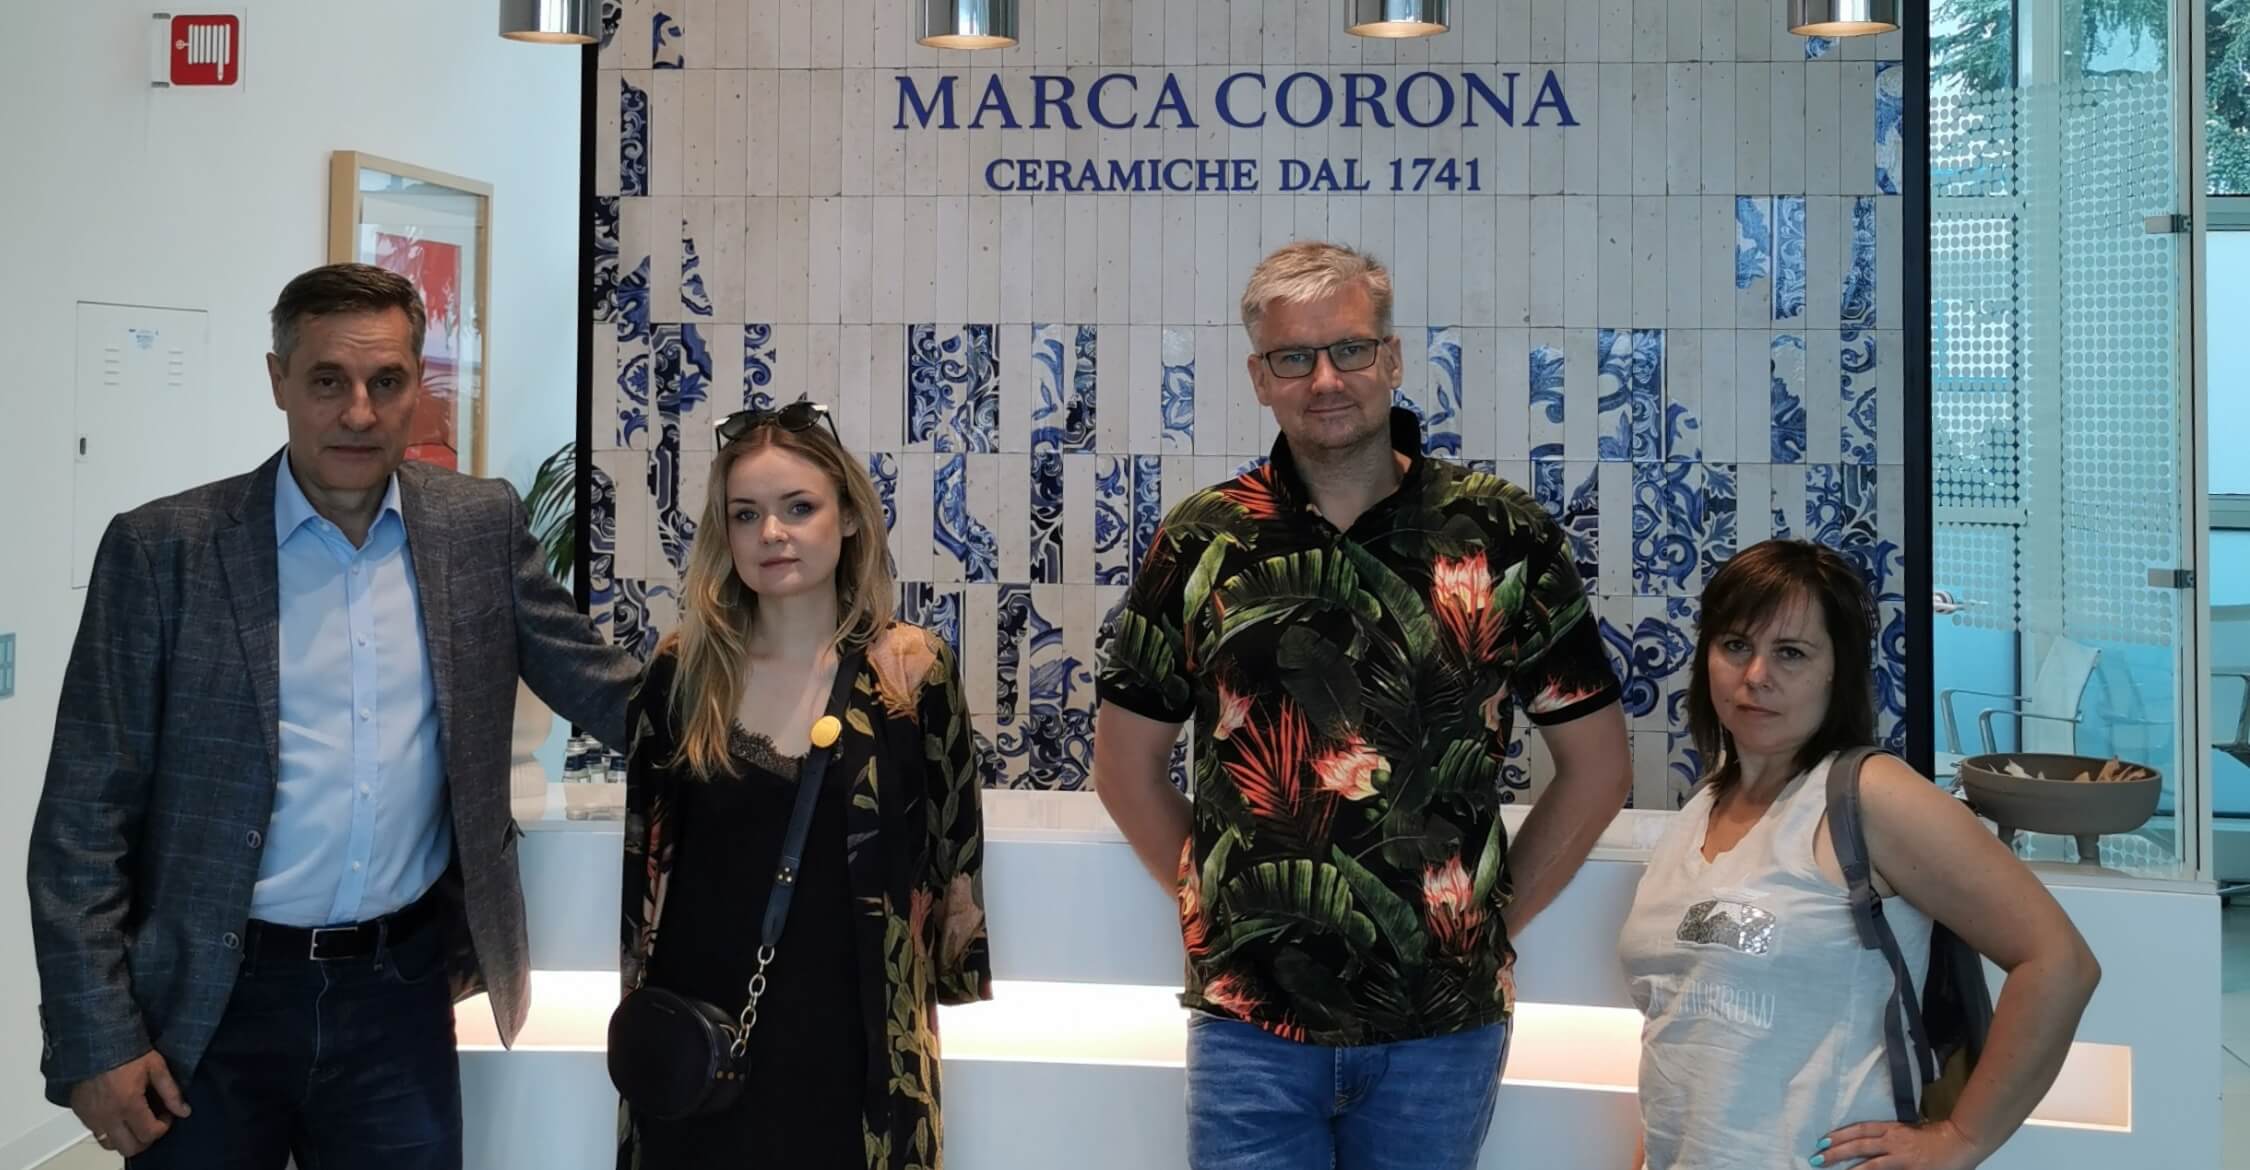 Fiorano Modenese – fabryka Marca Corona